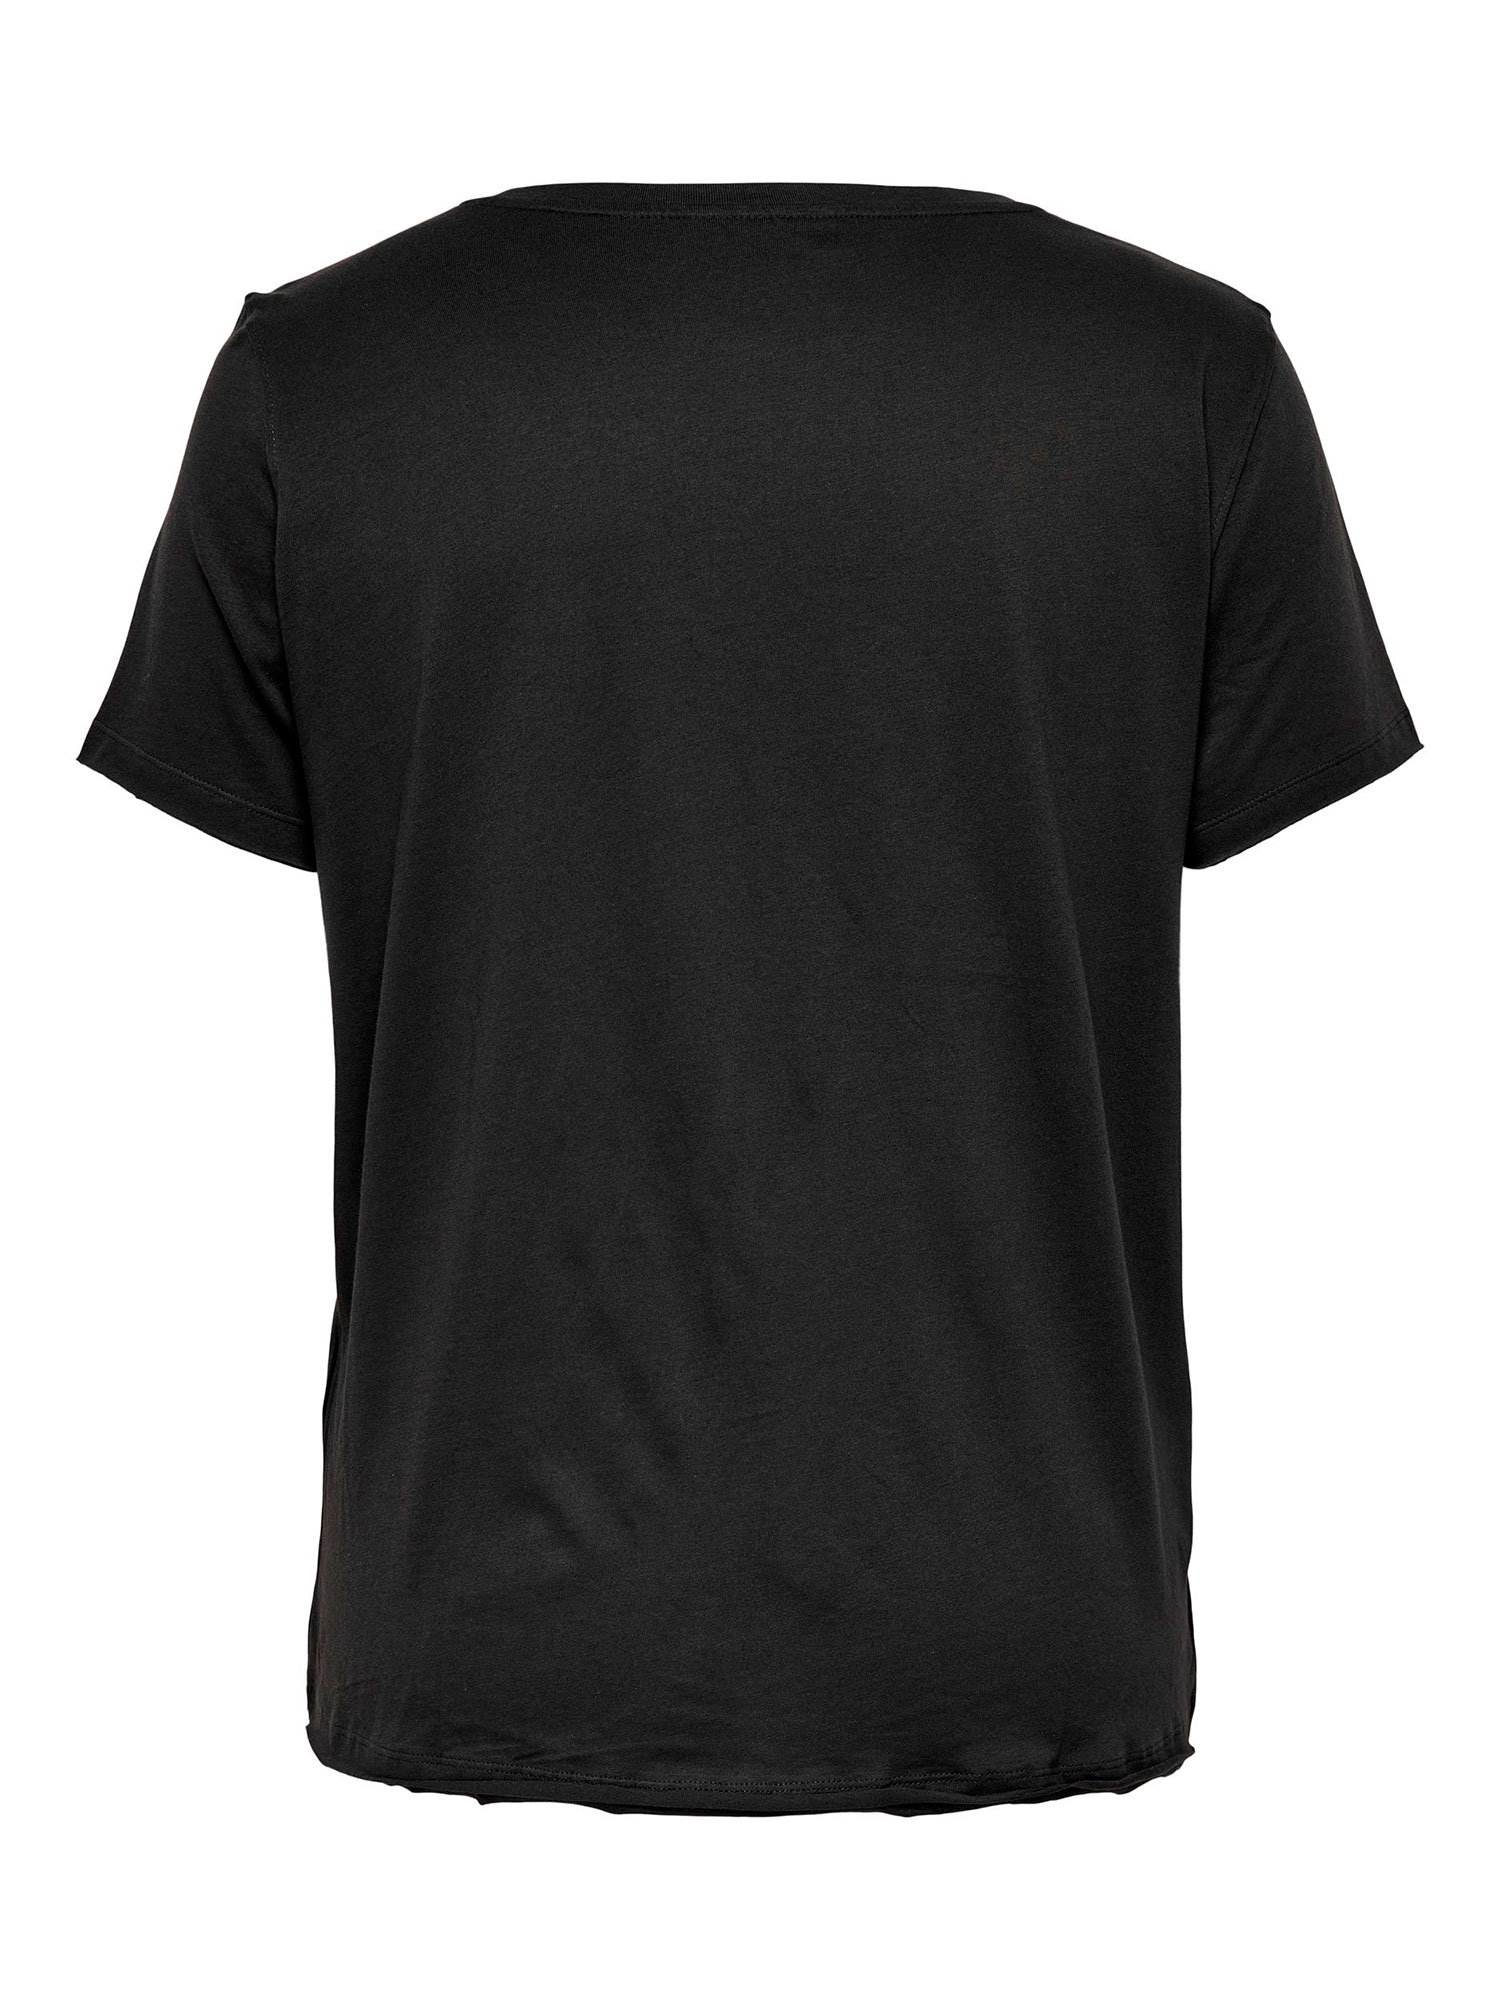 Car WILD - T-shirt i svart bomull med 